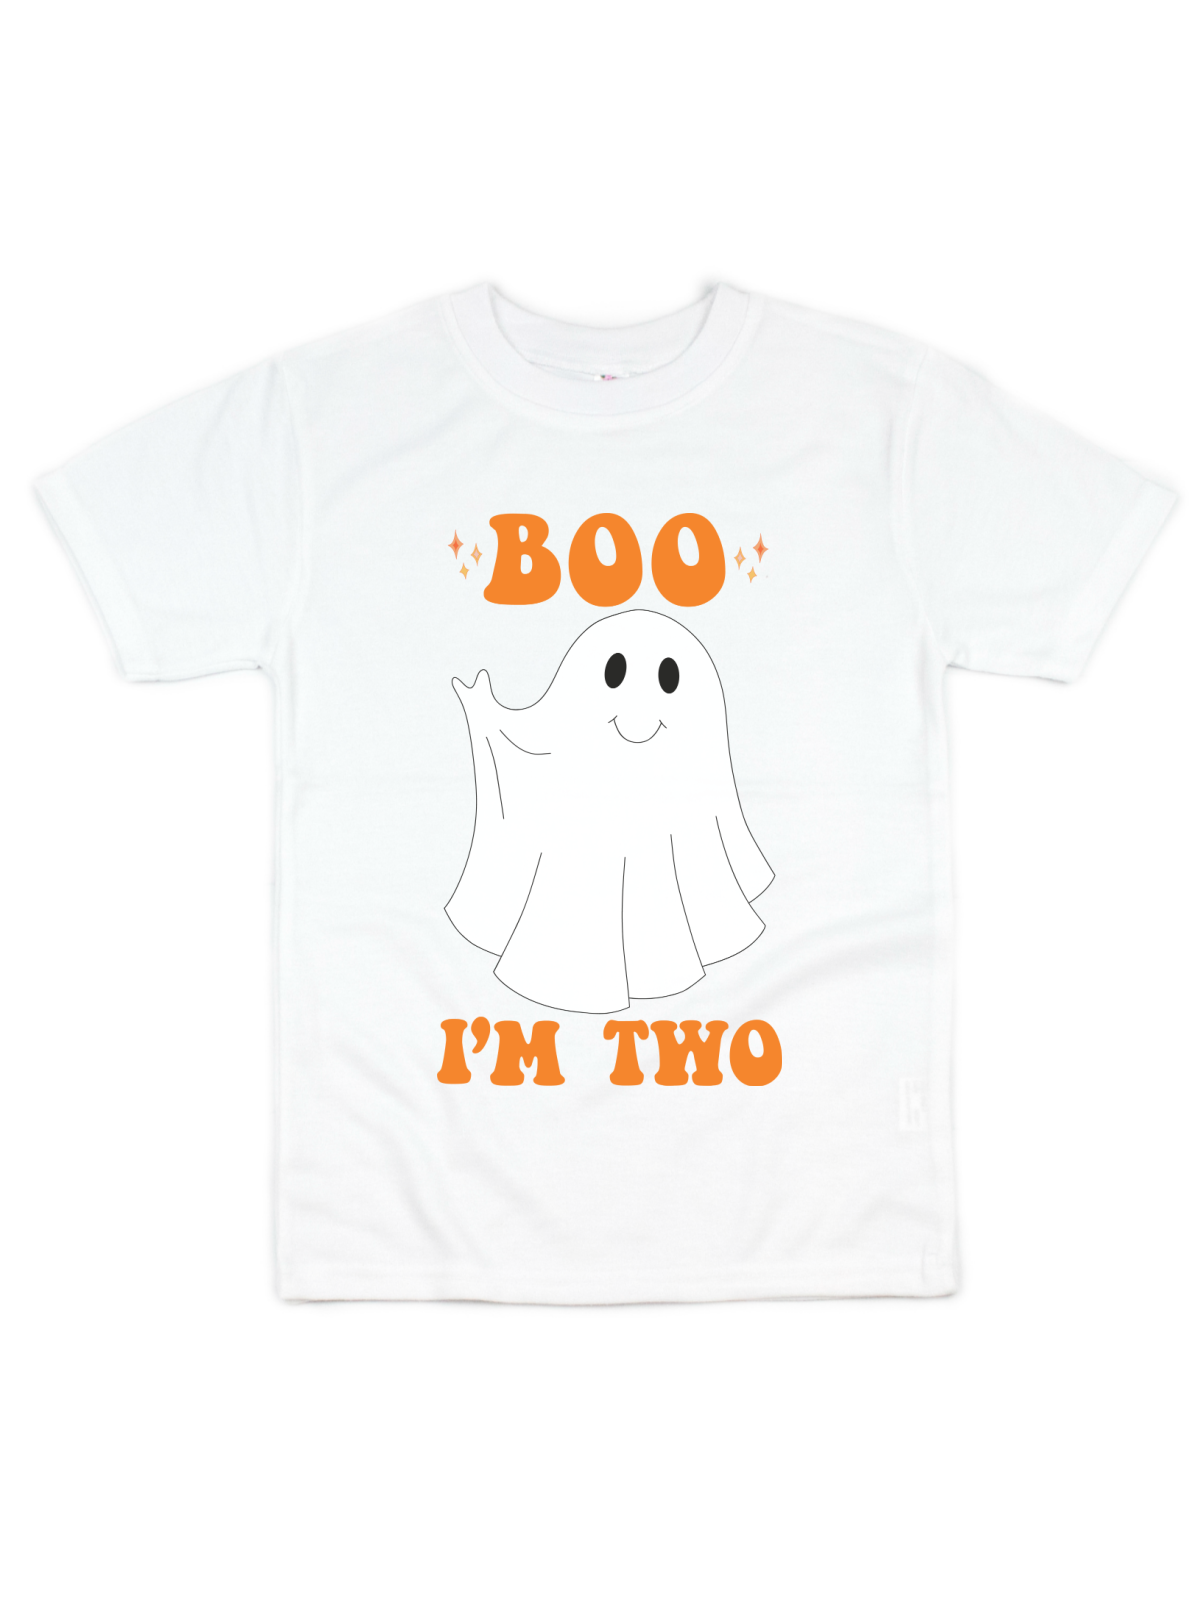 Boo I'm Two Groovy Retro Ghost Kids Birthday Shirt